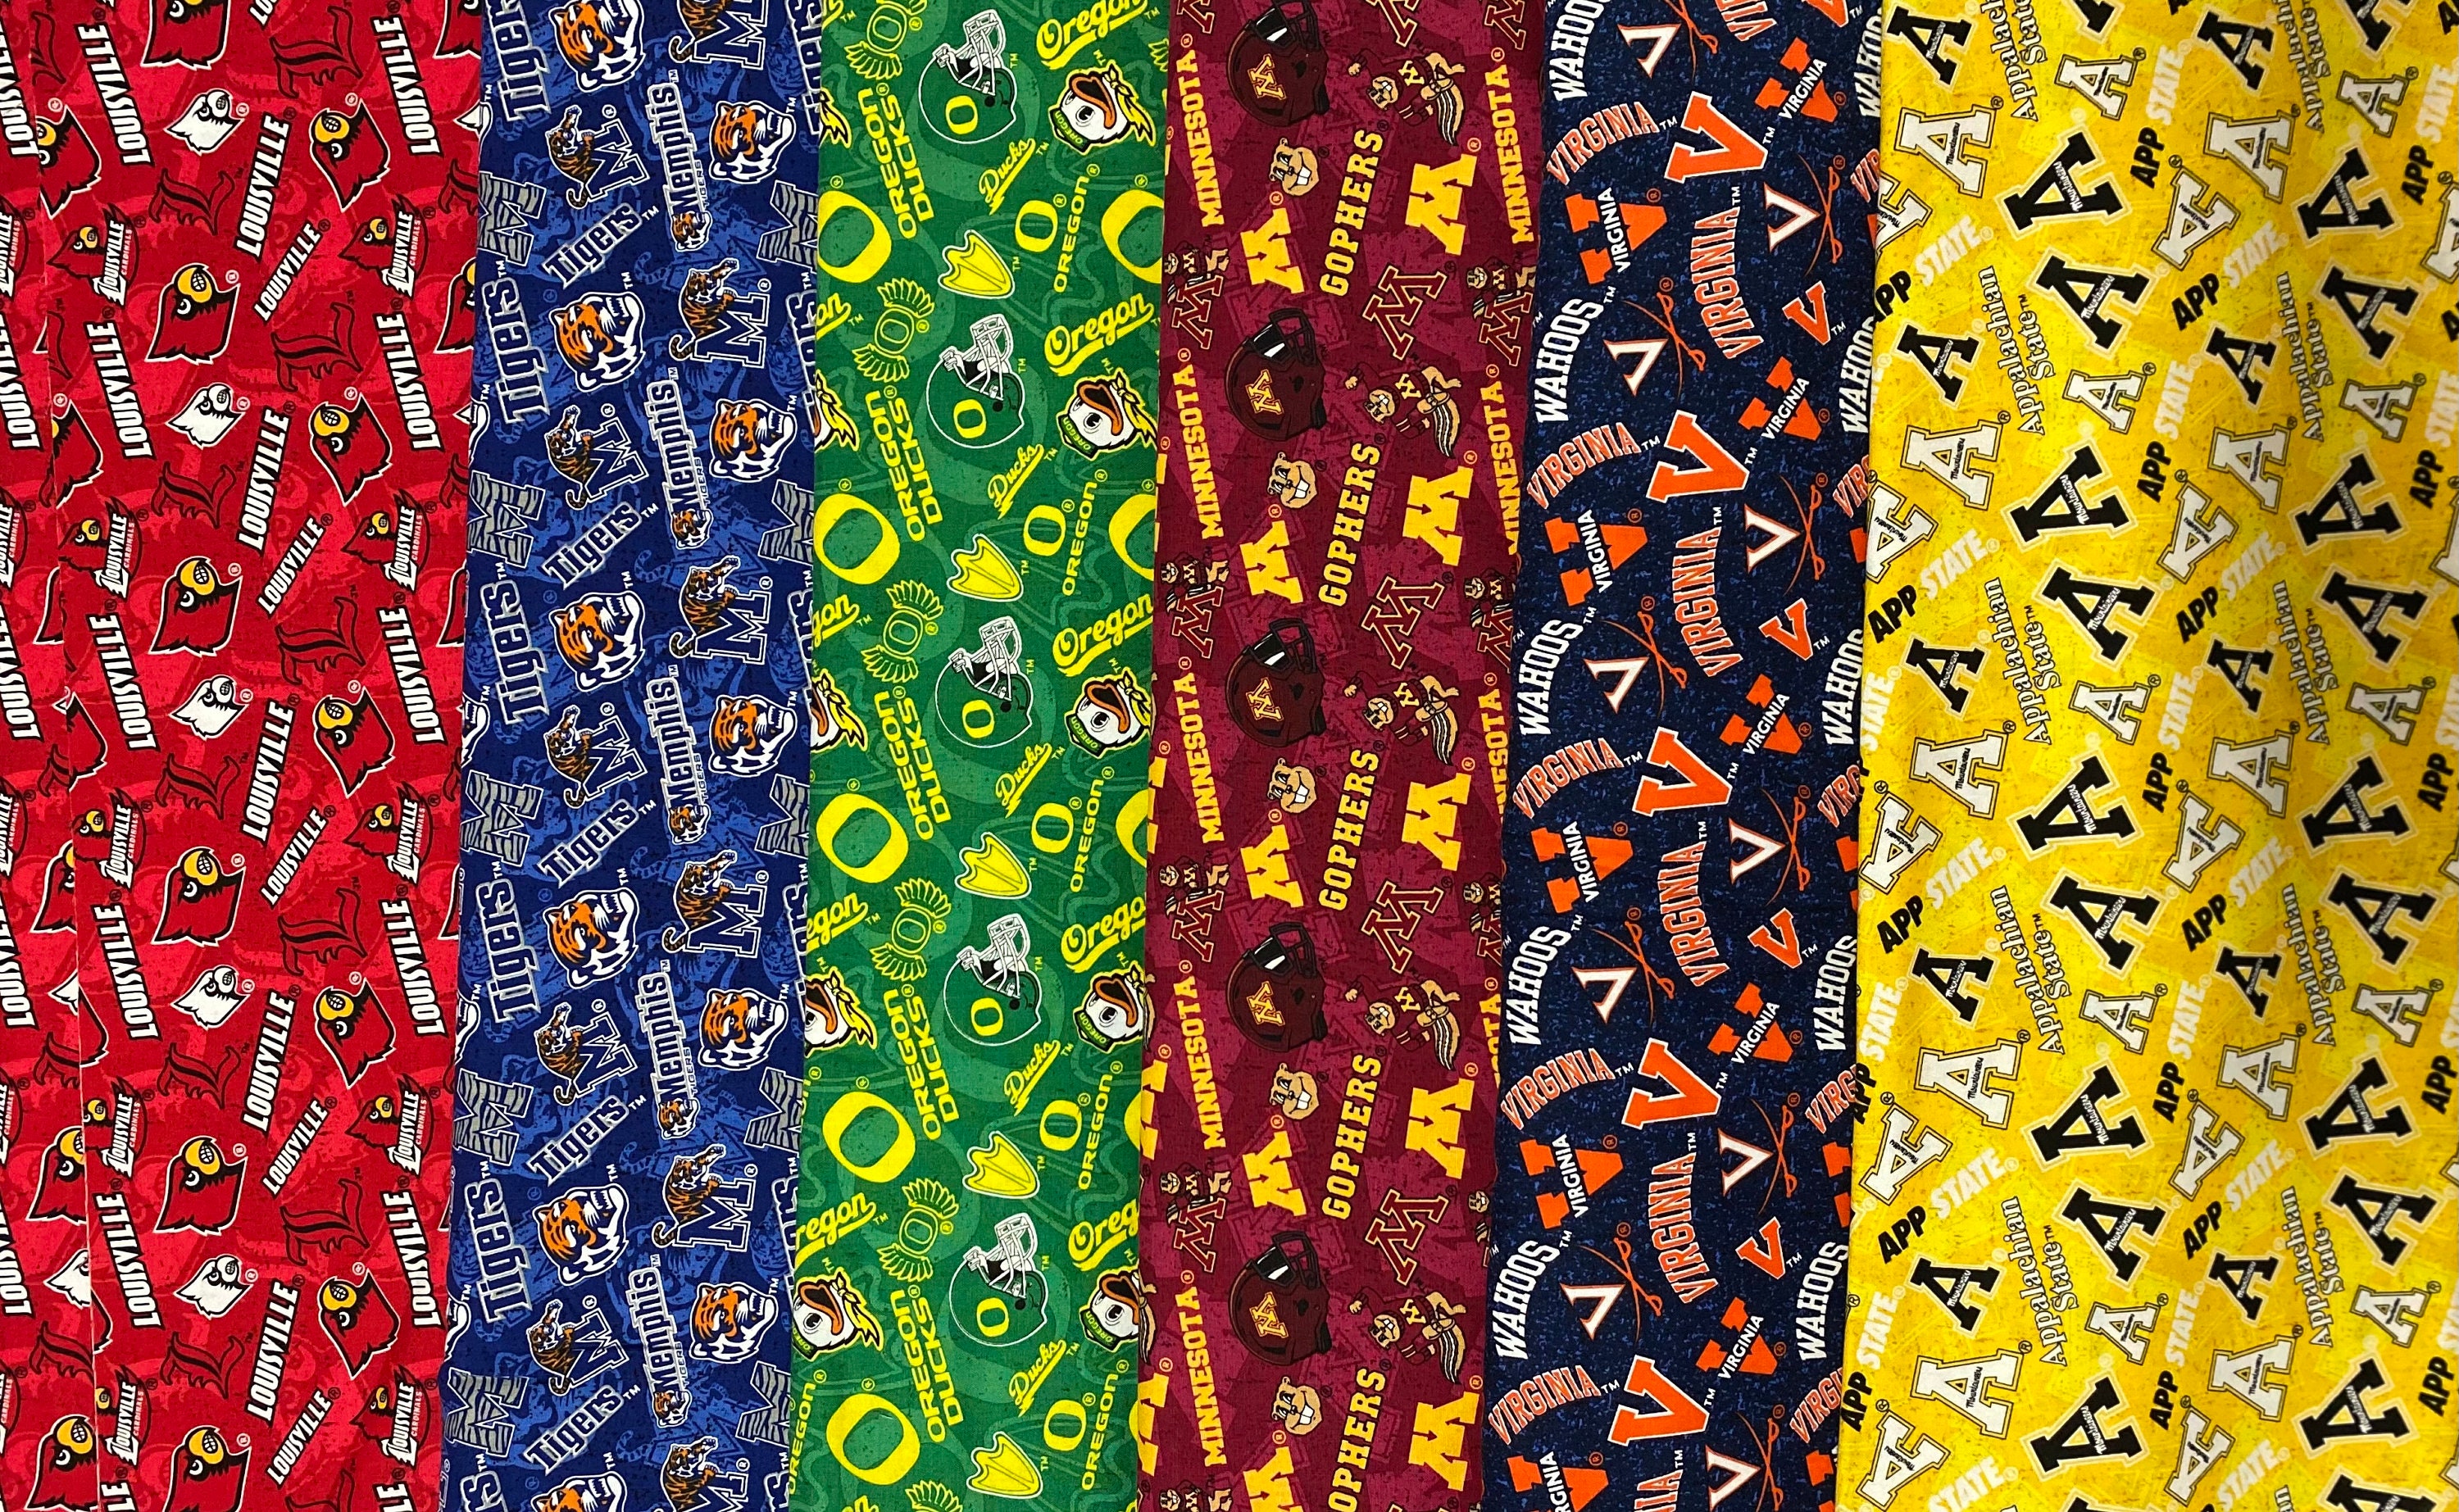 Fields Fabrics Cotton University of North Carolina Tar Heels Logos Blue Tone on Tone NCAA College Sports Team Cotton Fabric Print by The Yard